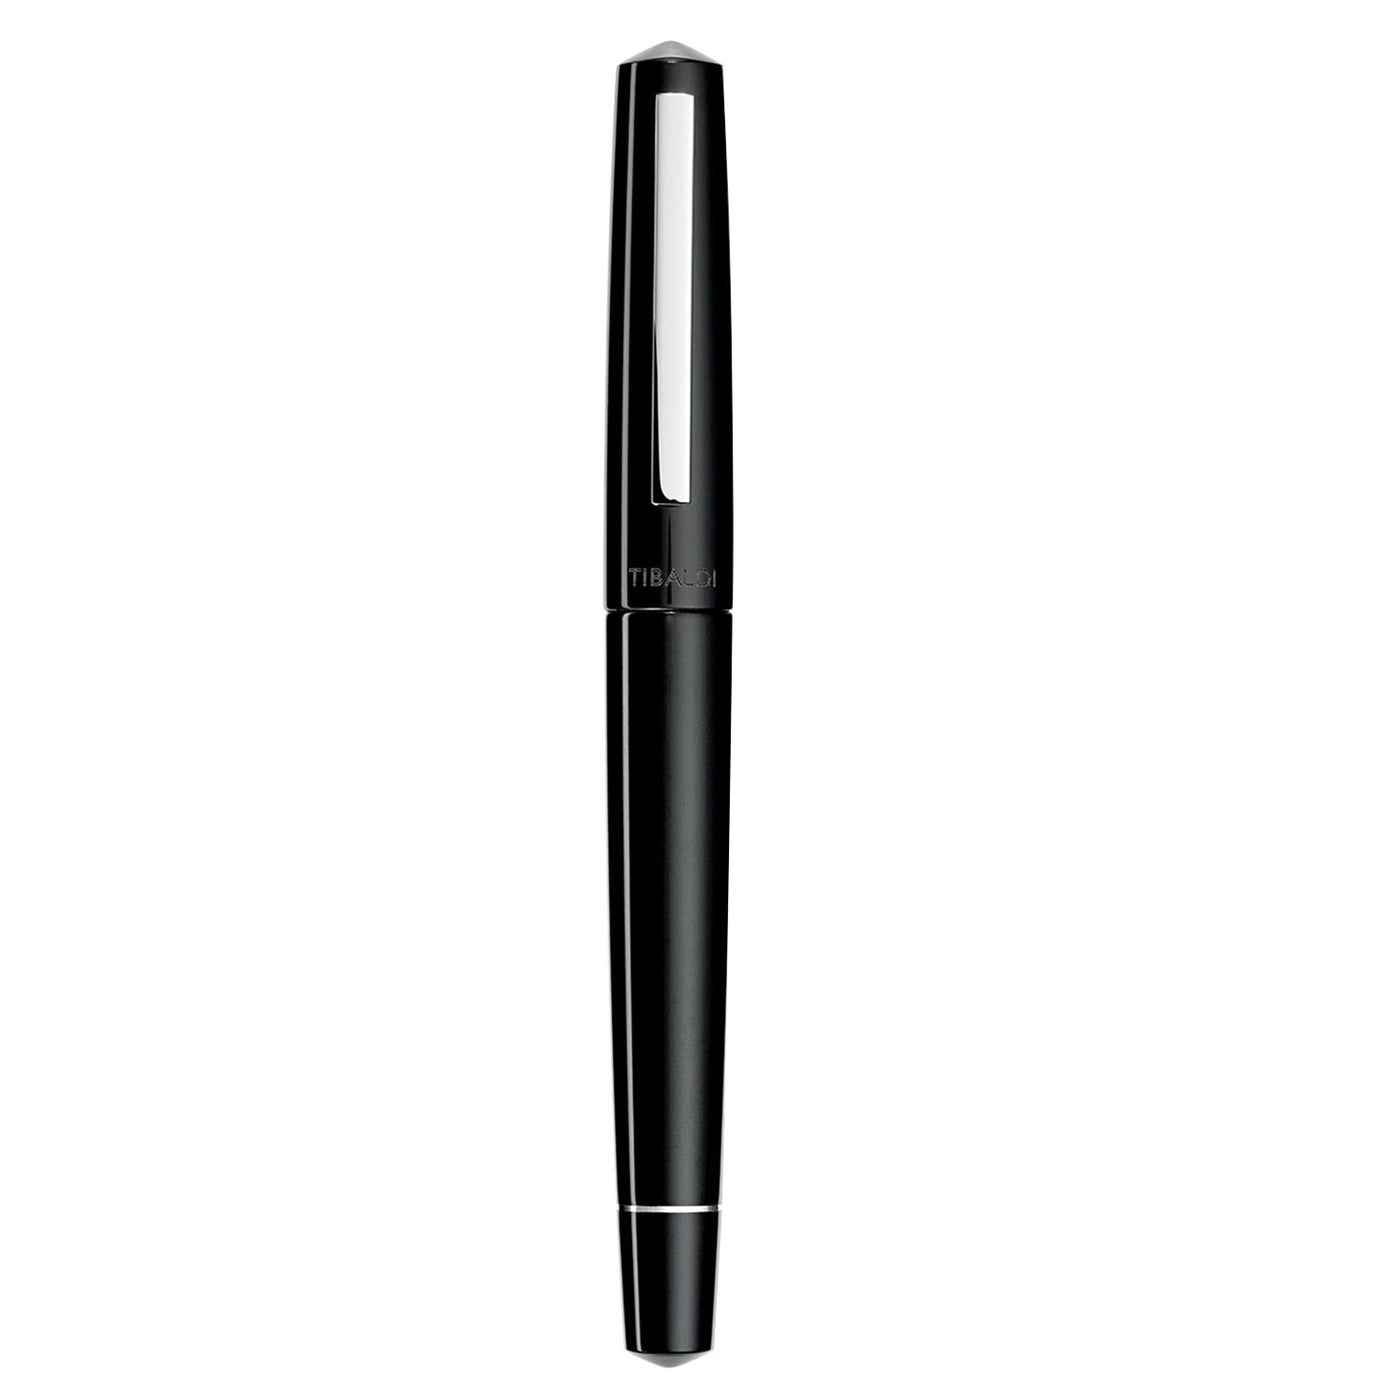 Tibaldi Infrangibile Roller Ball Pen - Rich Black 16